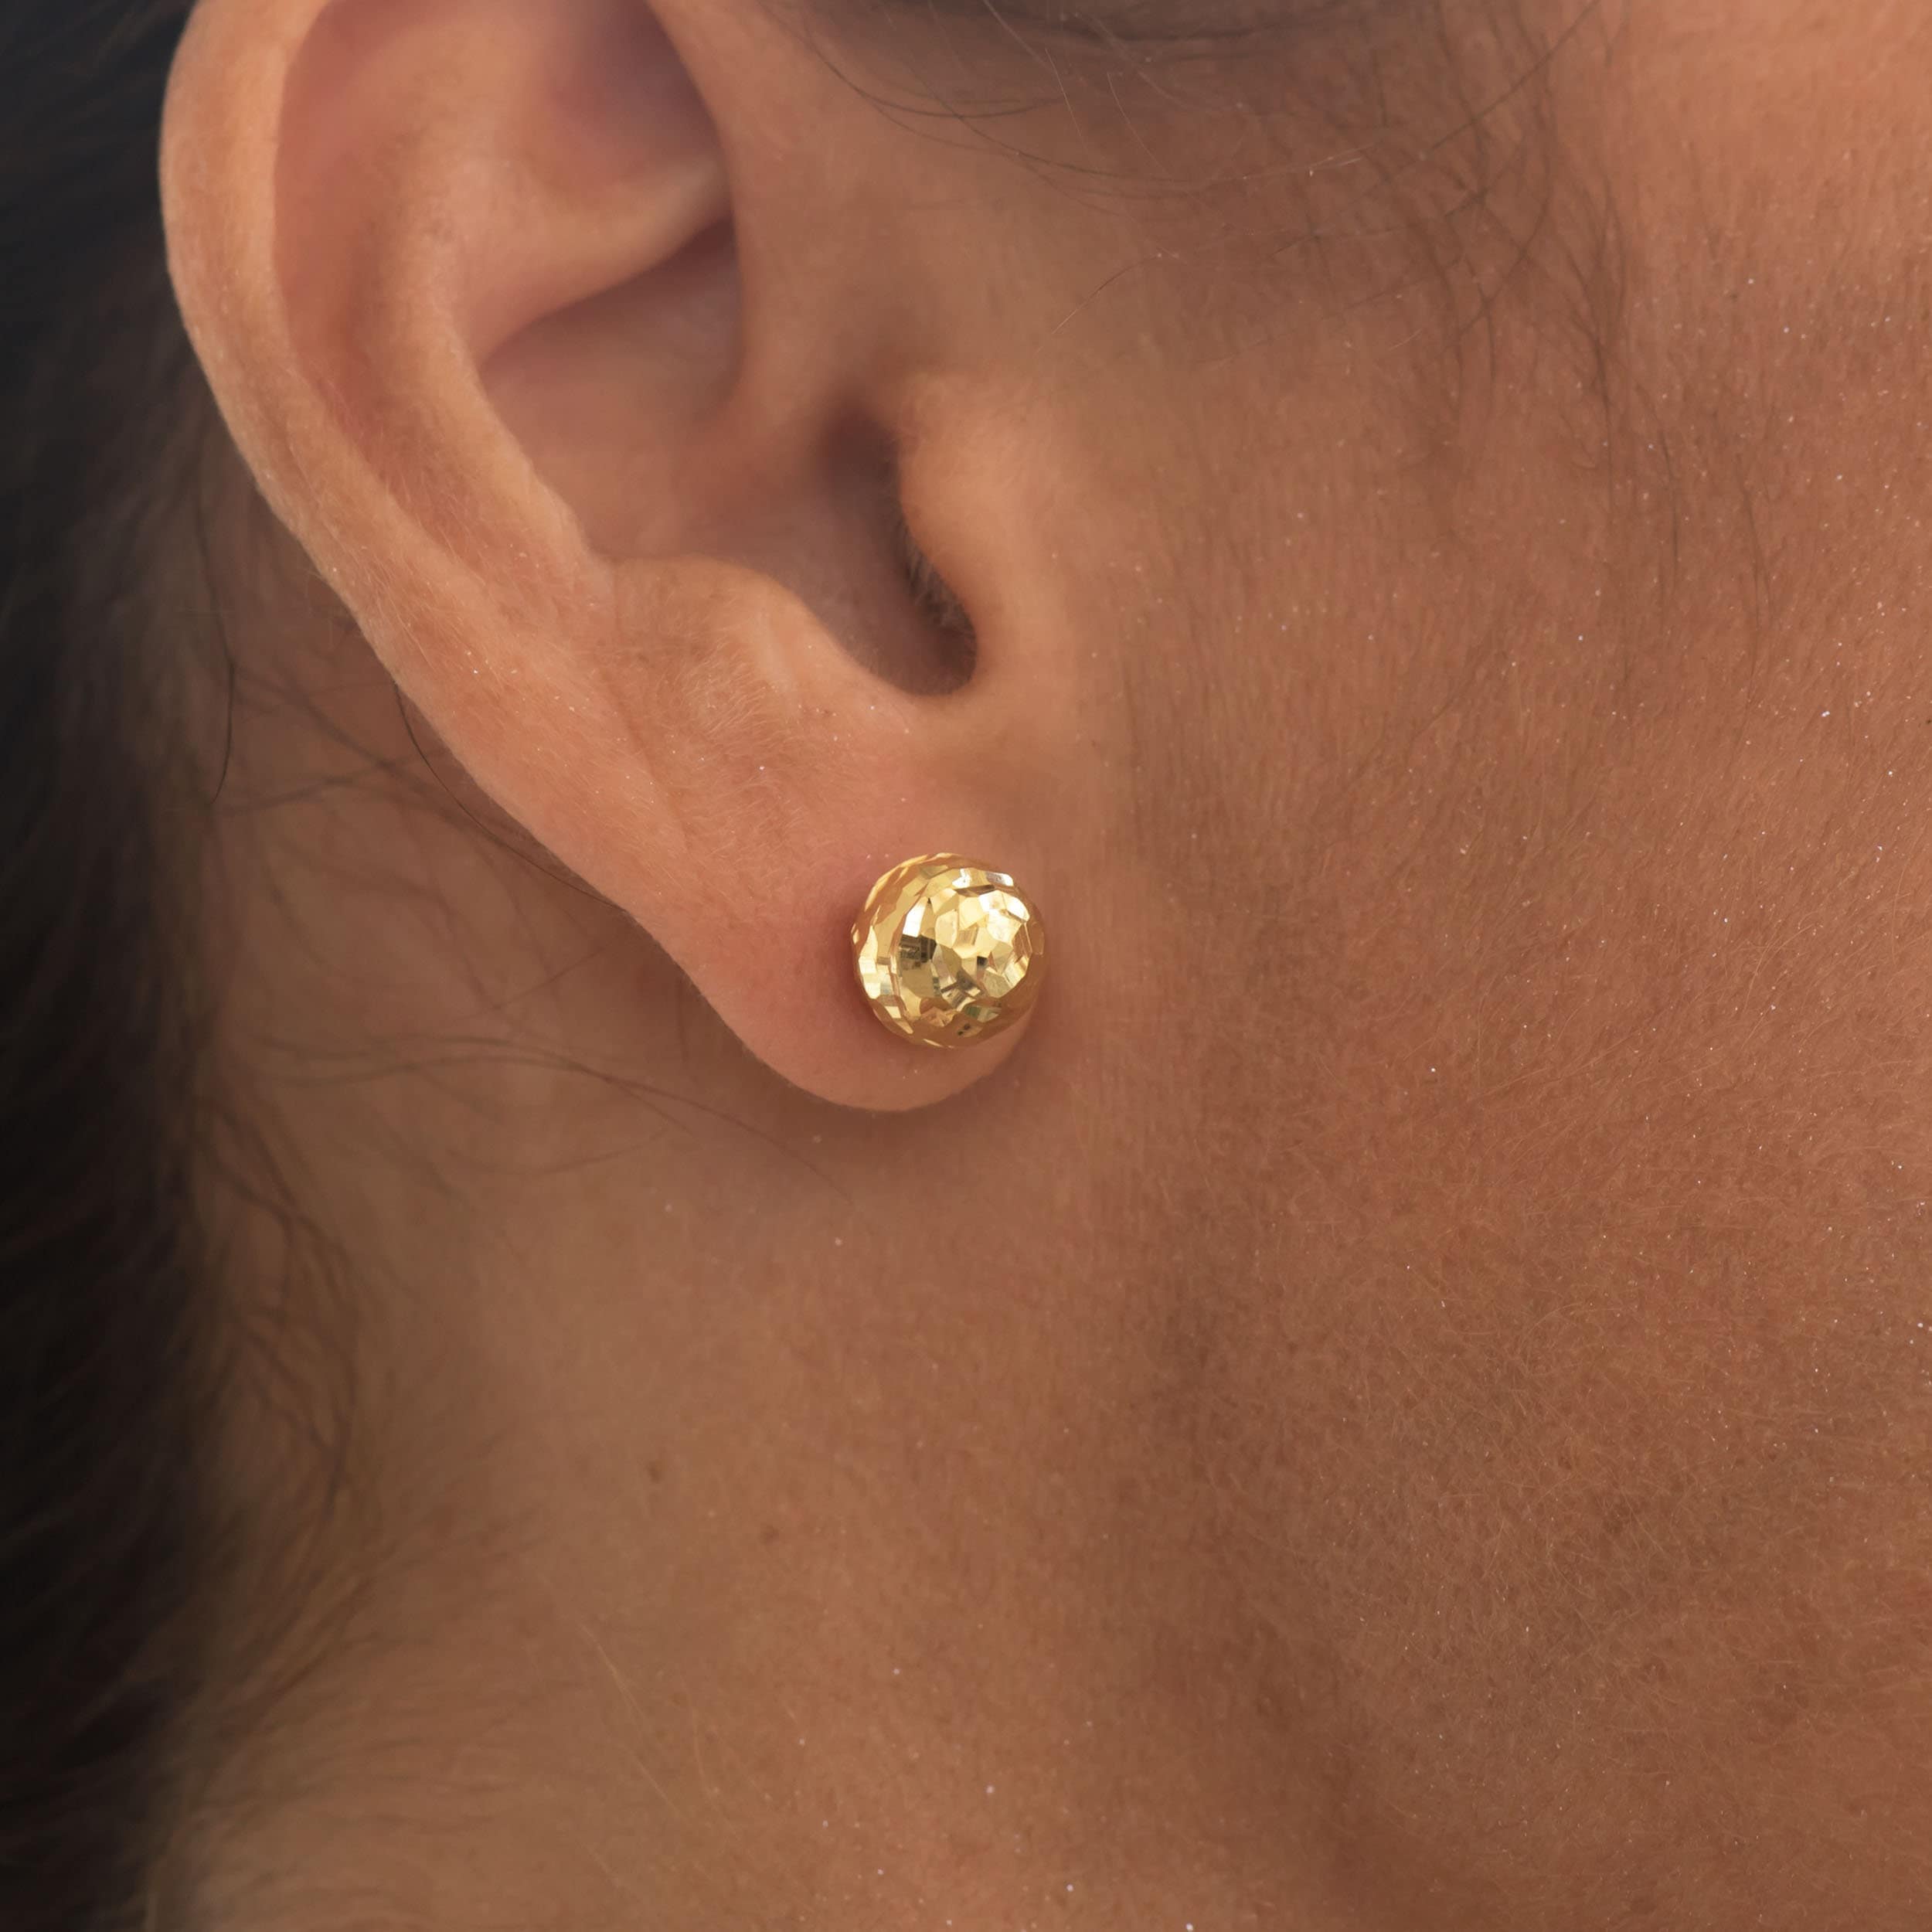 Aggregate 239+ gold ball earrings super hot